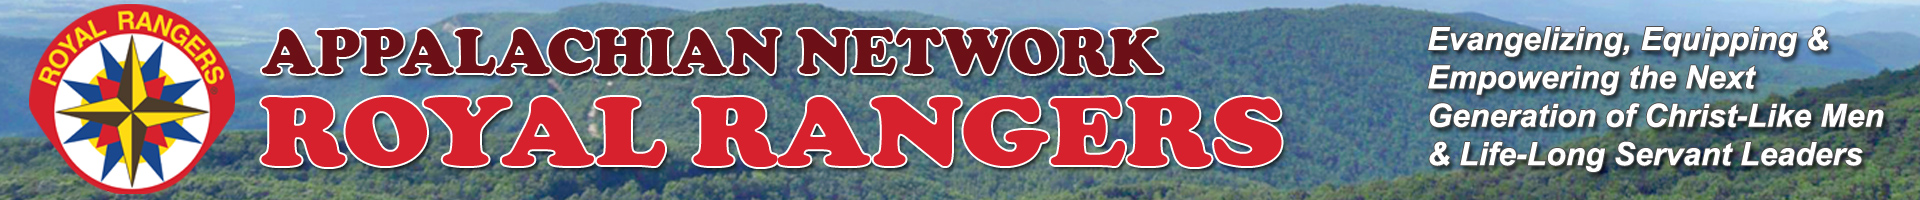 Appalachian Network Royal Rangers